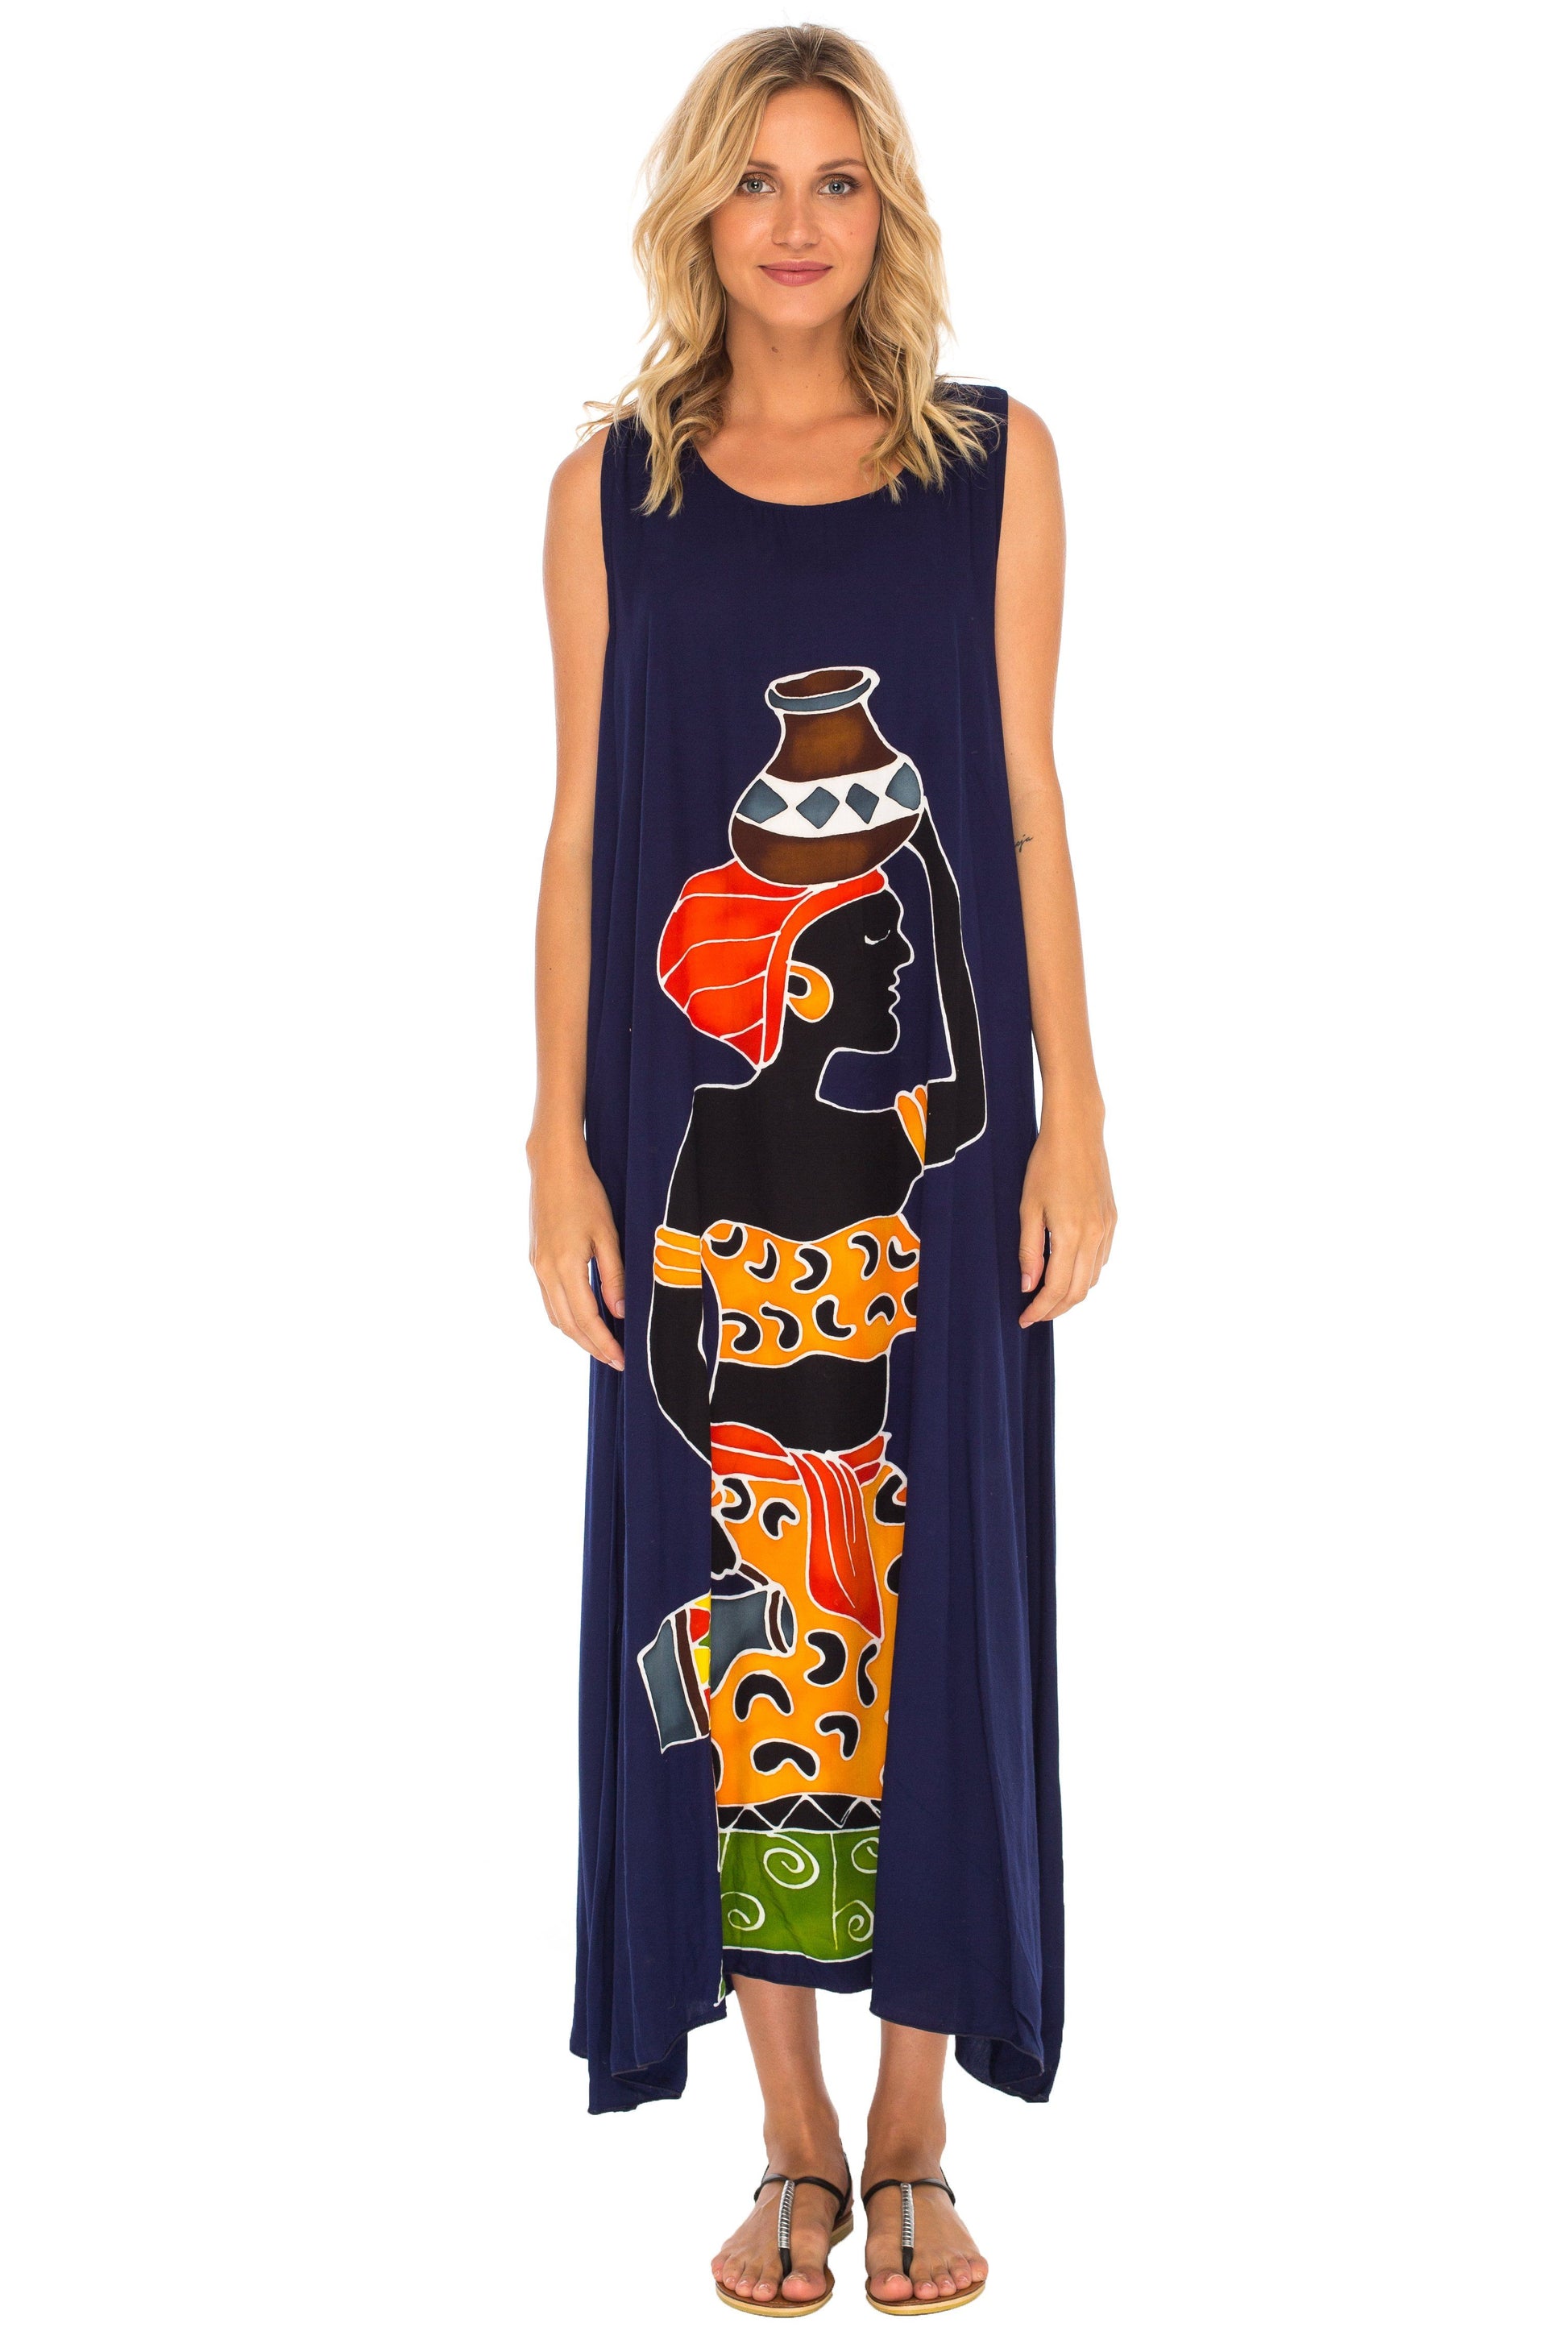 Sleeveless Summer Tank Dress with Hand-painted Tribal Design - Love-ShuShi-navy blue-Shu-Shi